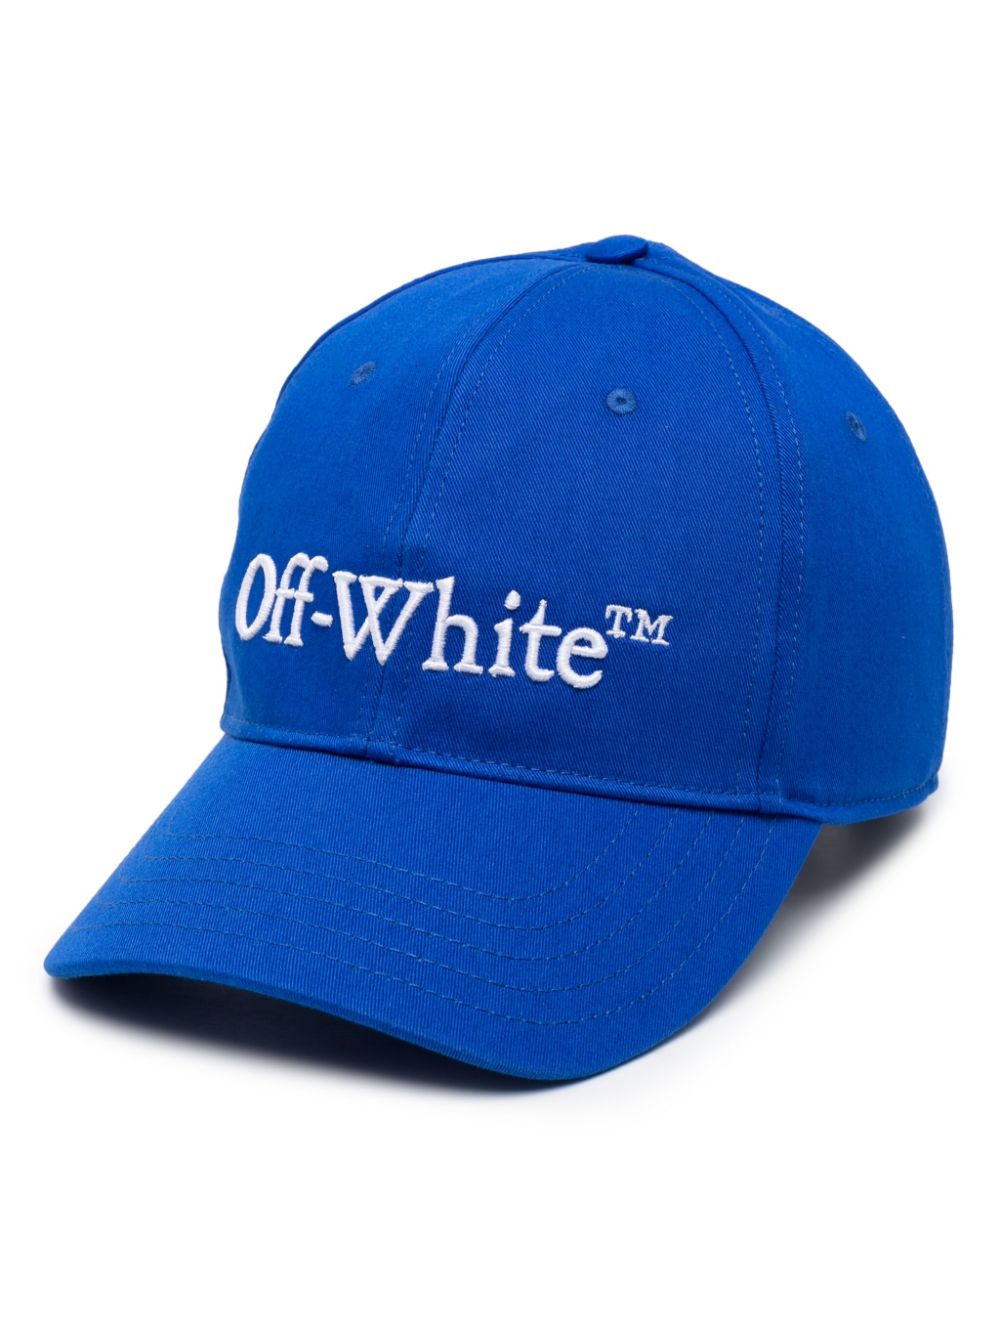 OFF-WHITE LOGO-EMBROIDERED BASEBALL CAP